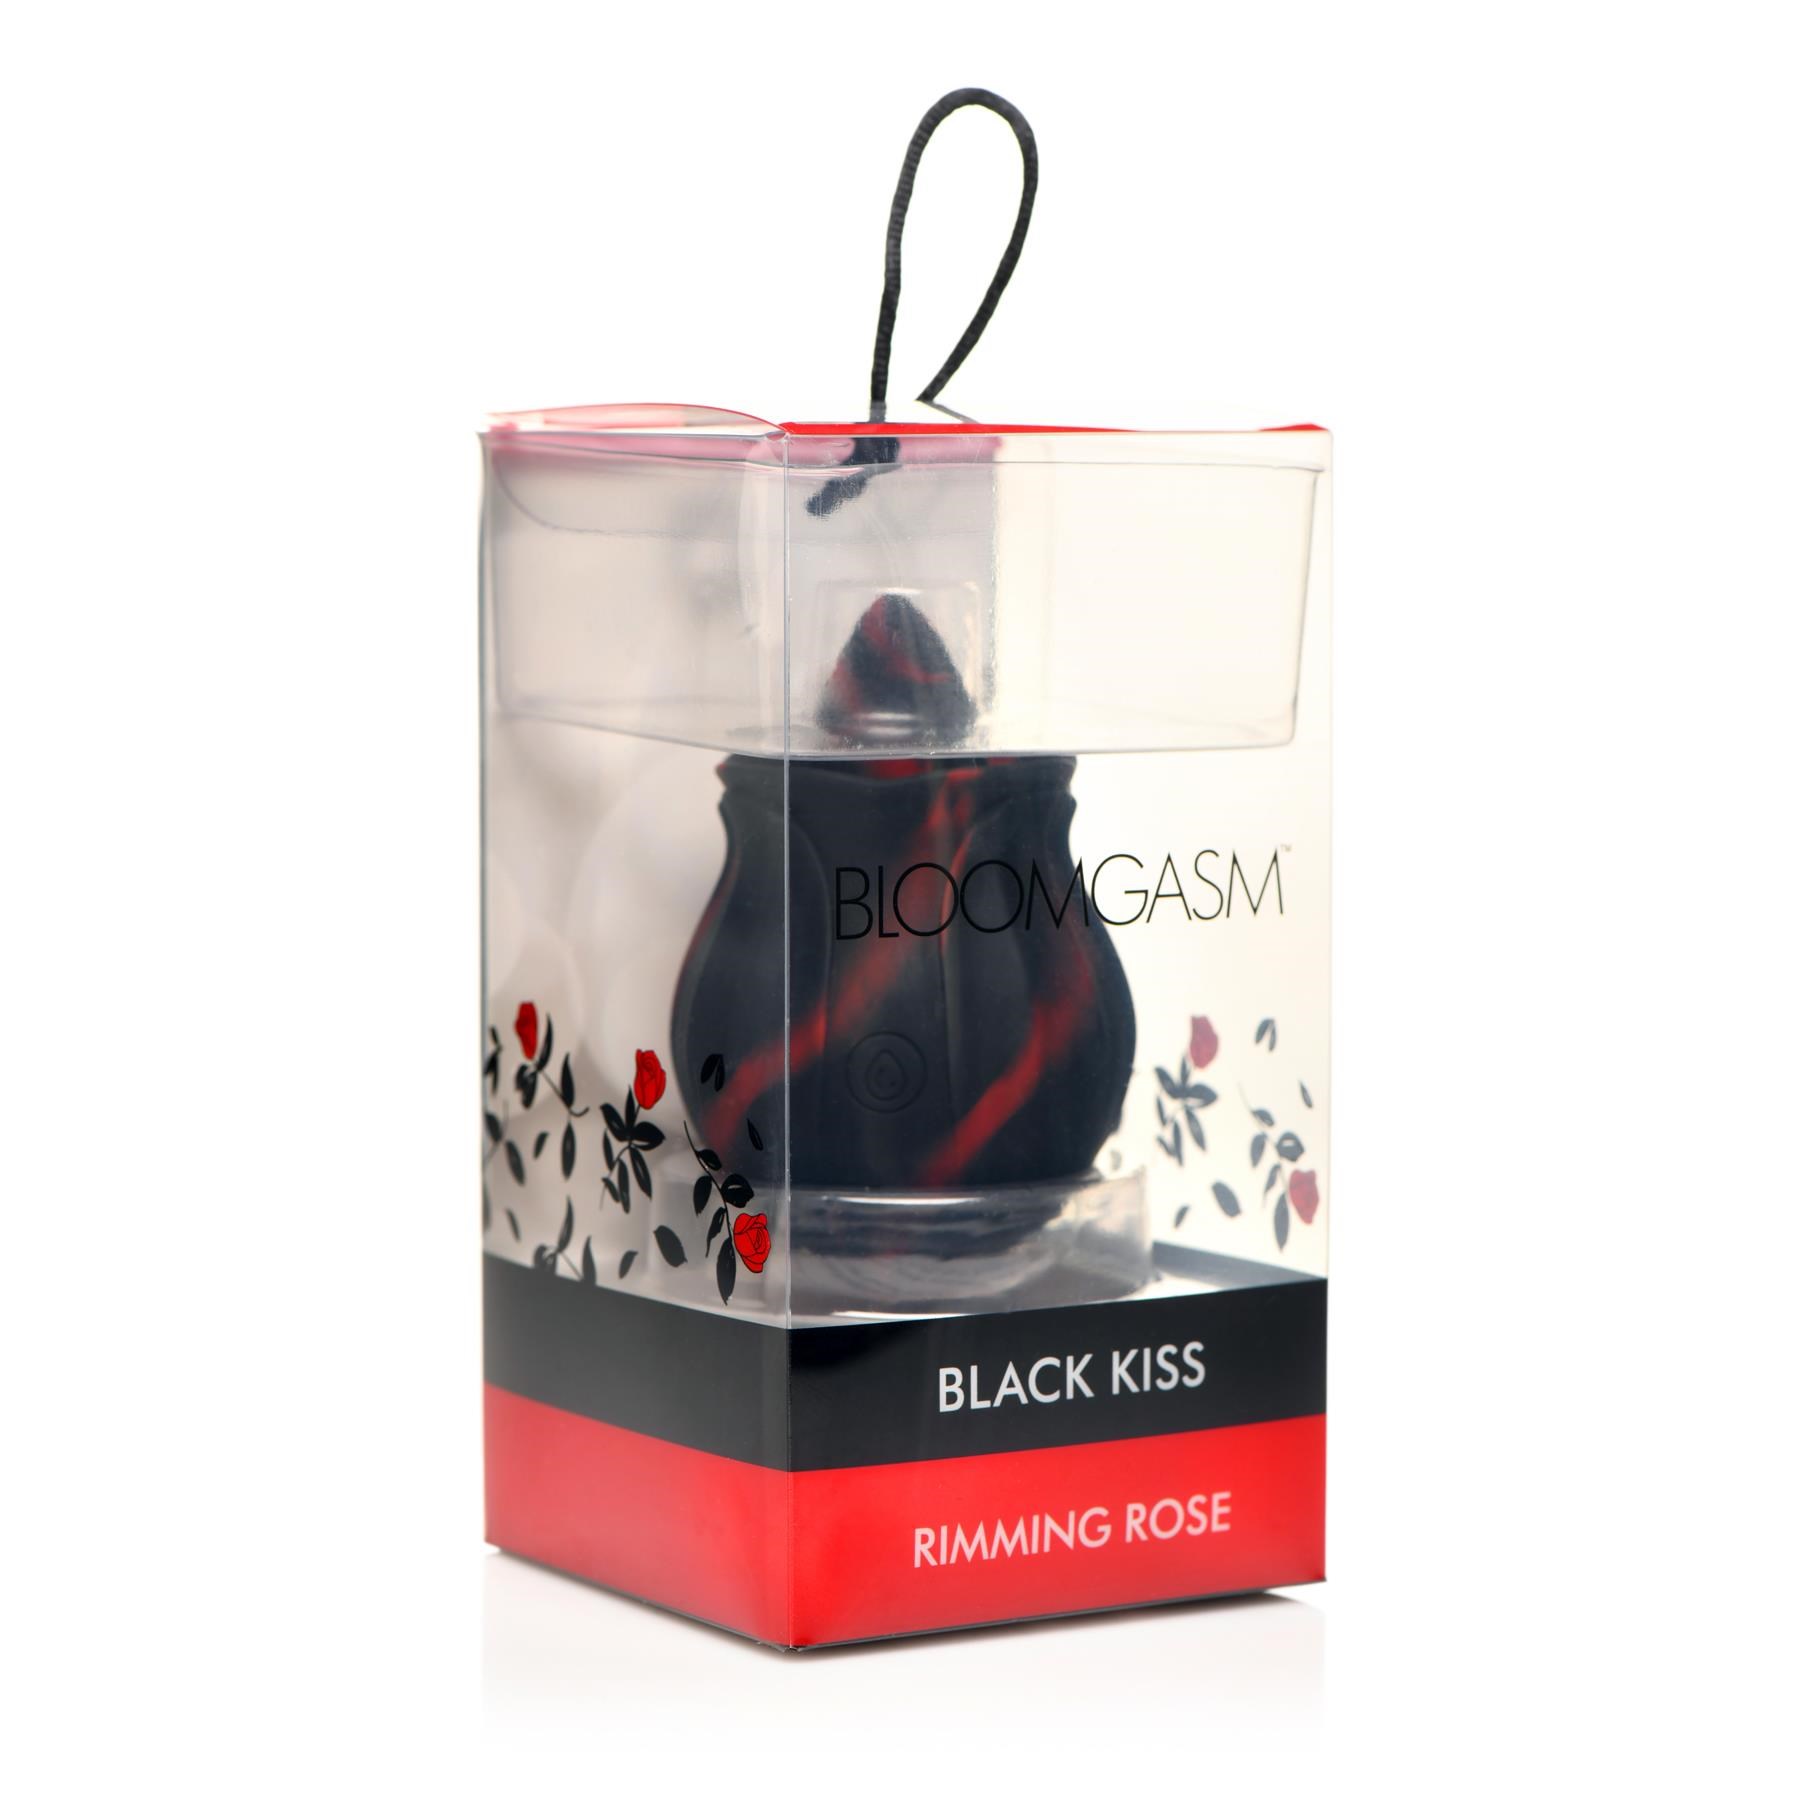 Bloomgasm Black Kiss Rimming Rose - Packaging Shot